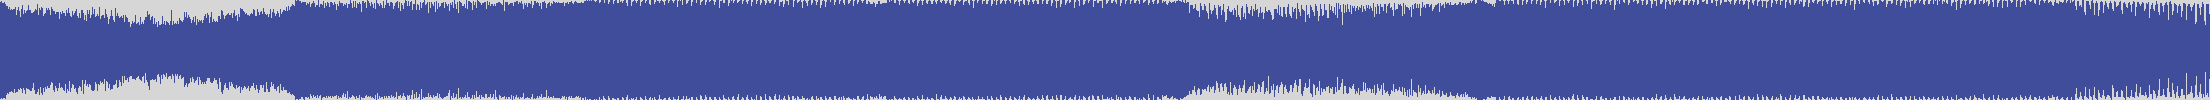 atomic_recordings [AR005] Mssc - Alhambra [Radio Edit] audio wave form